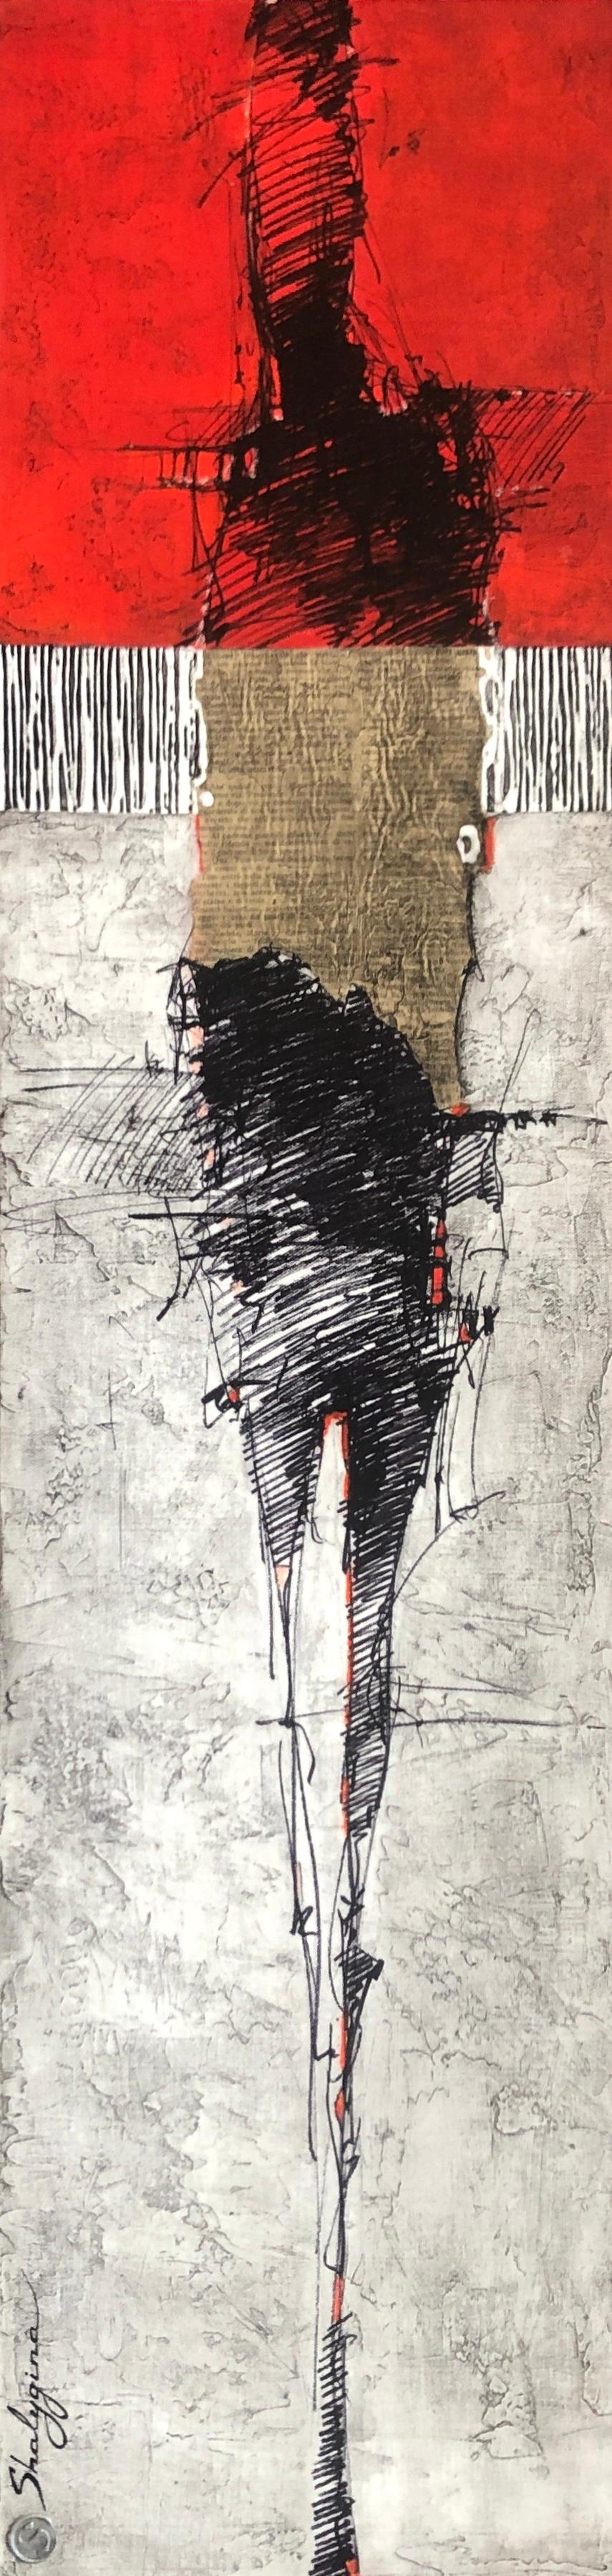 Svetlana Shalygina Figurative Painting - Theories of Personality, series (original red/grey figurative abstract painting)